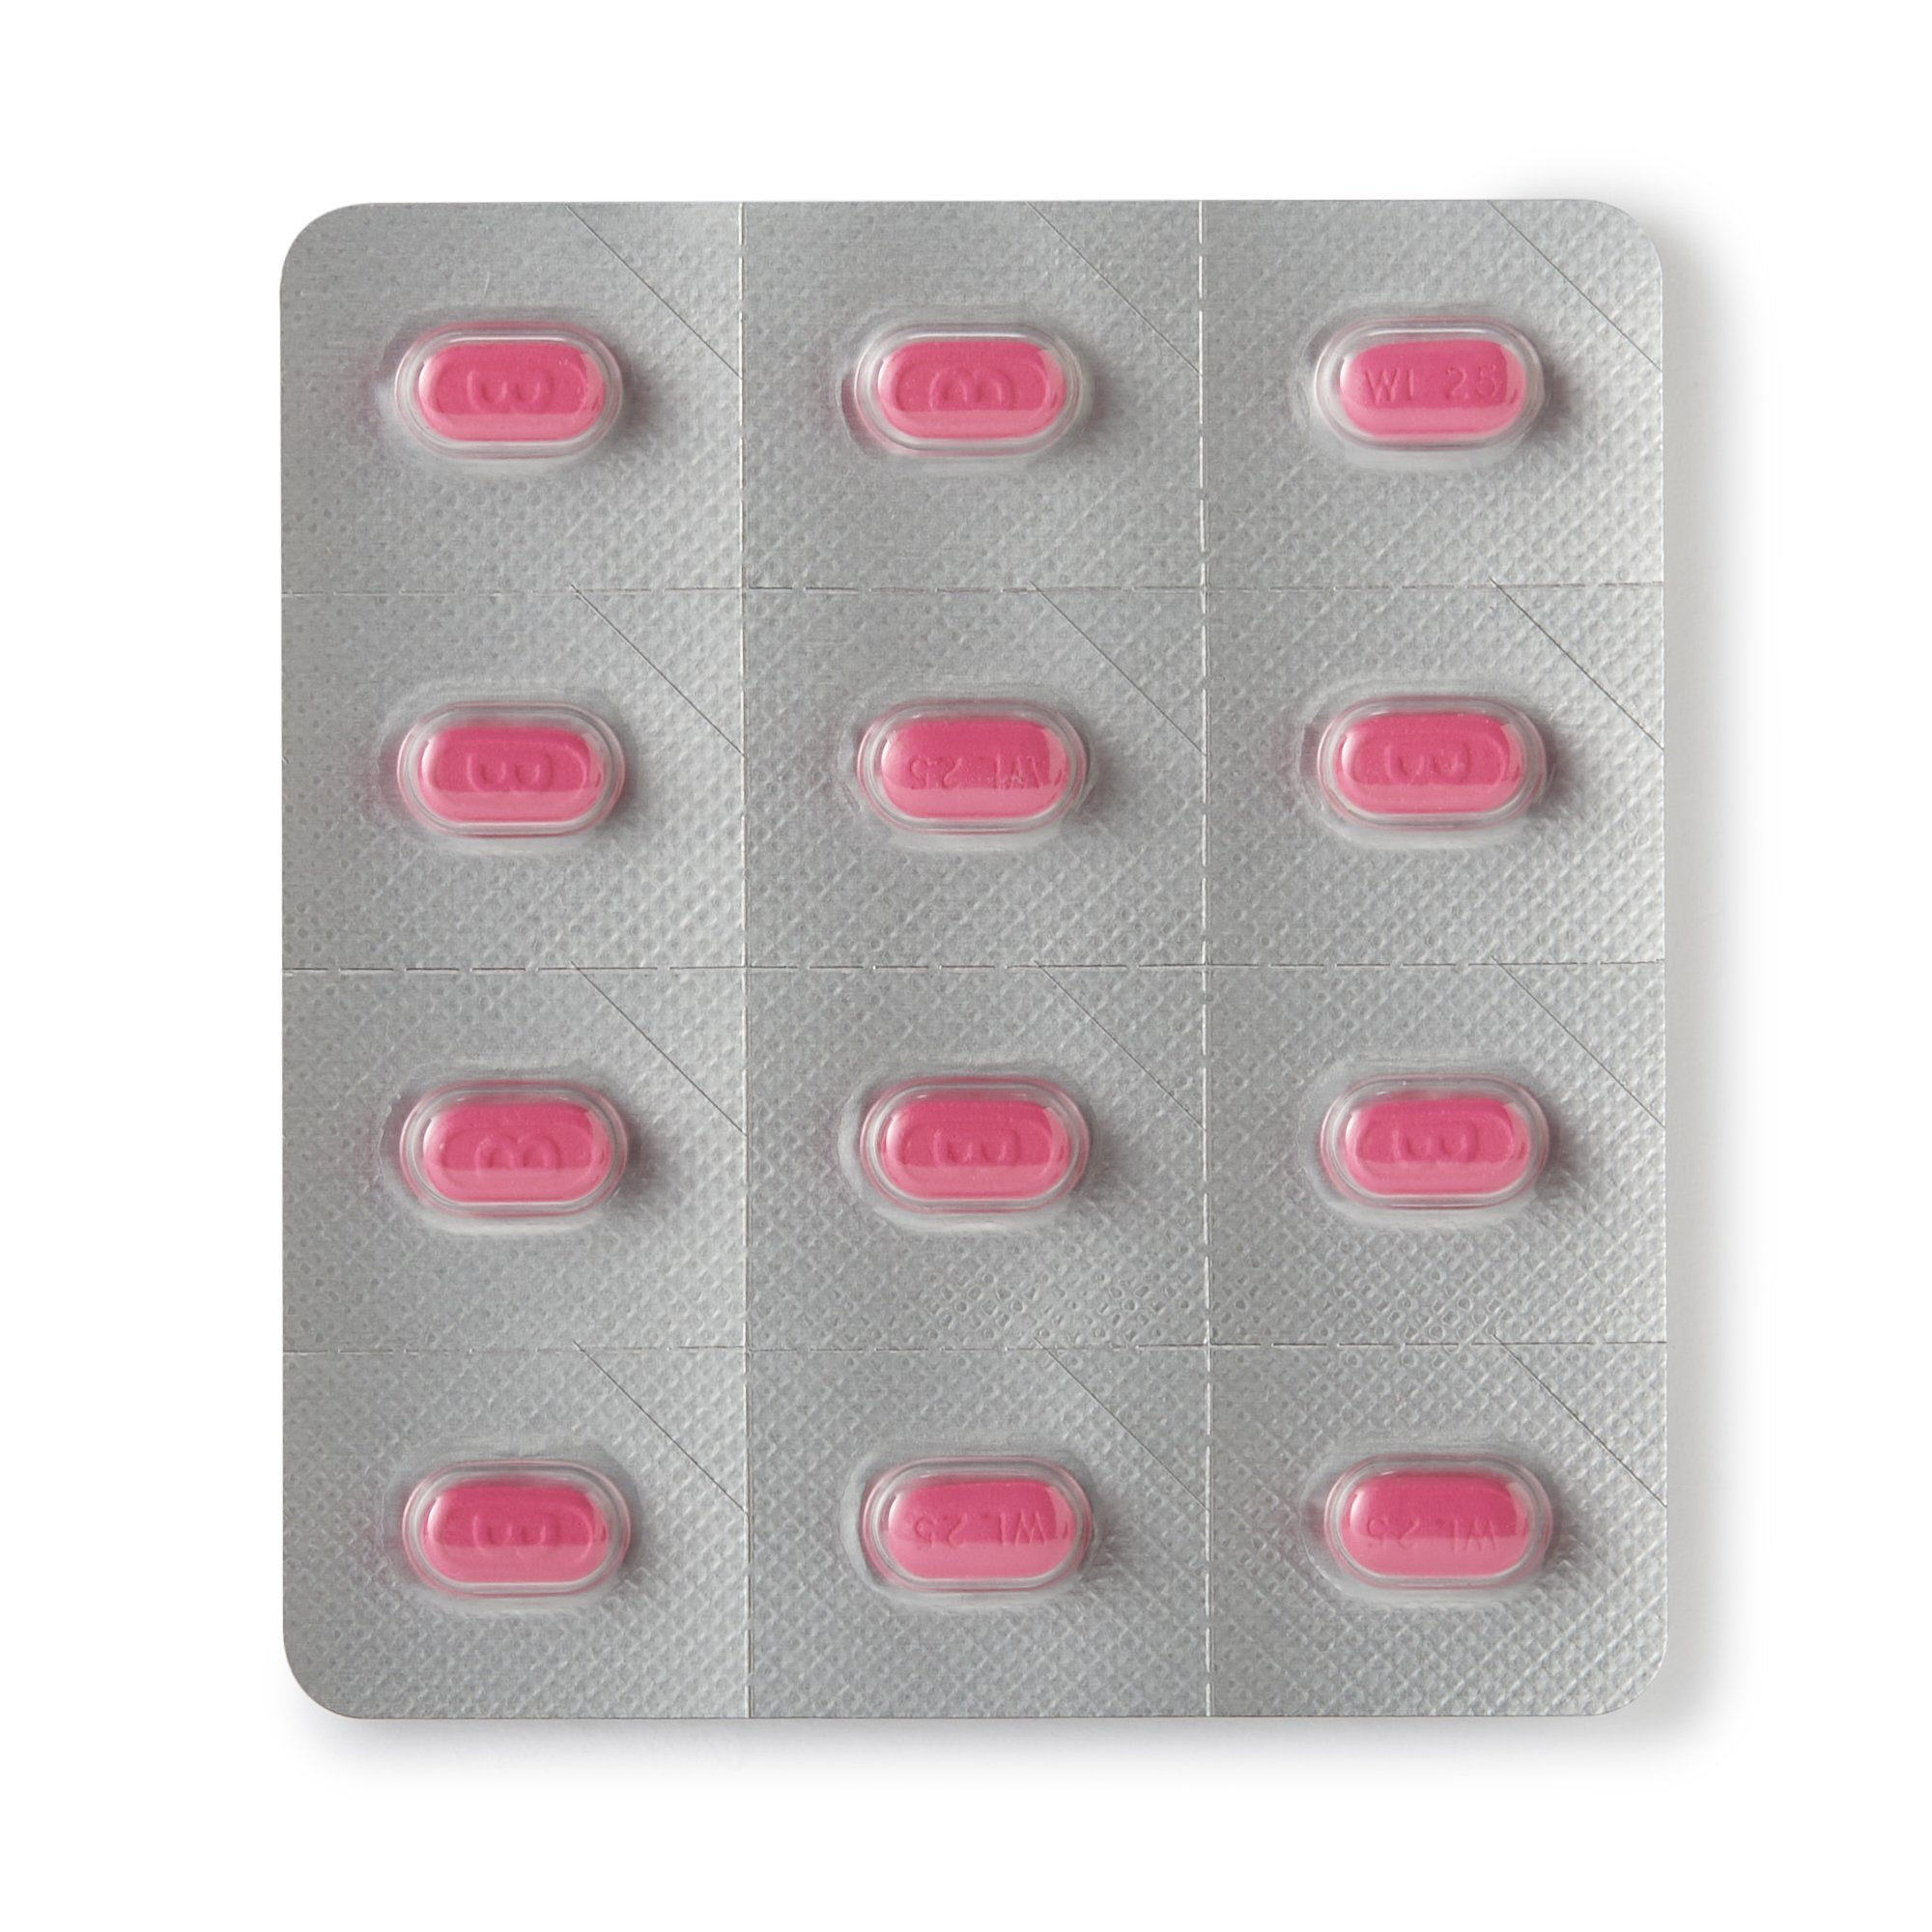 Allergy Relief Benadryl® 25 mg Strength Tablet 24 per Box